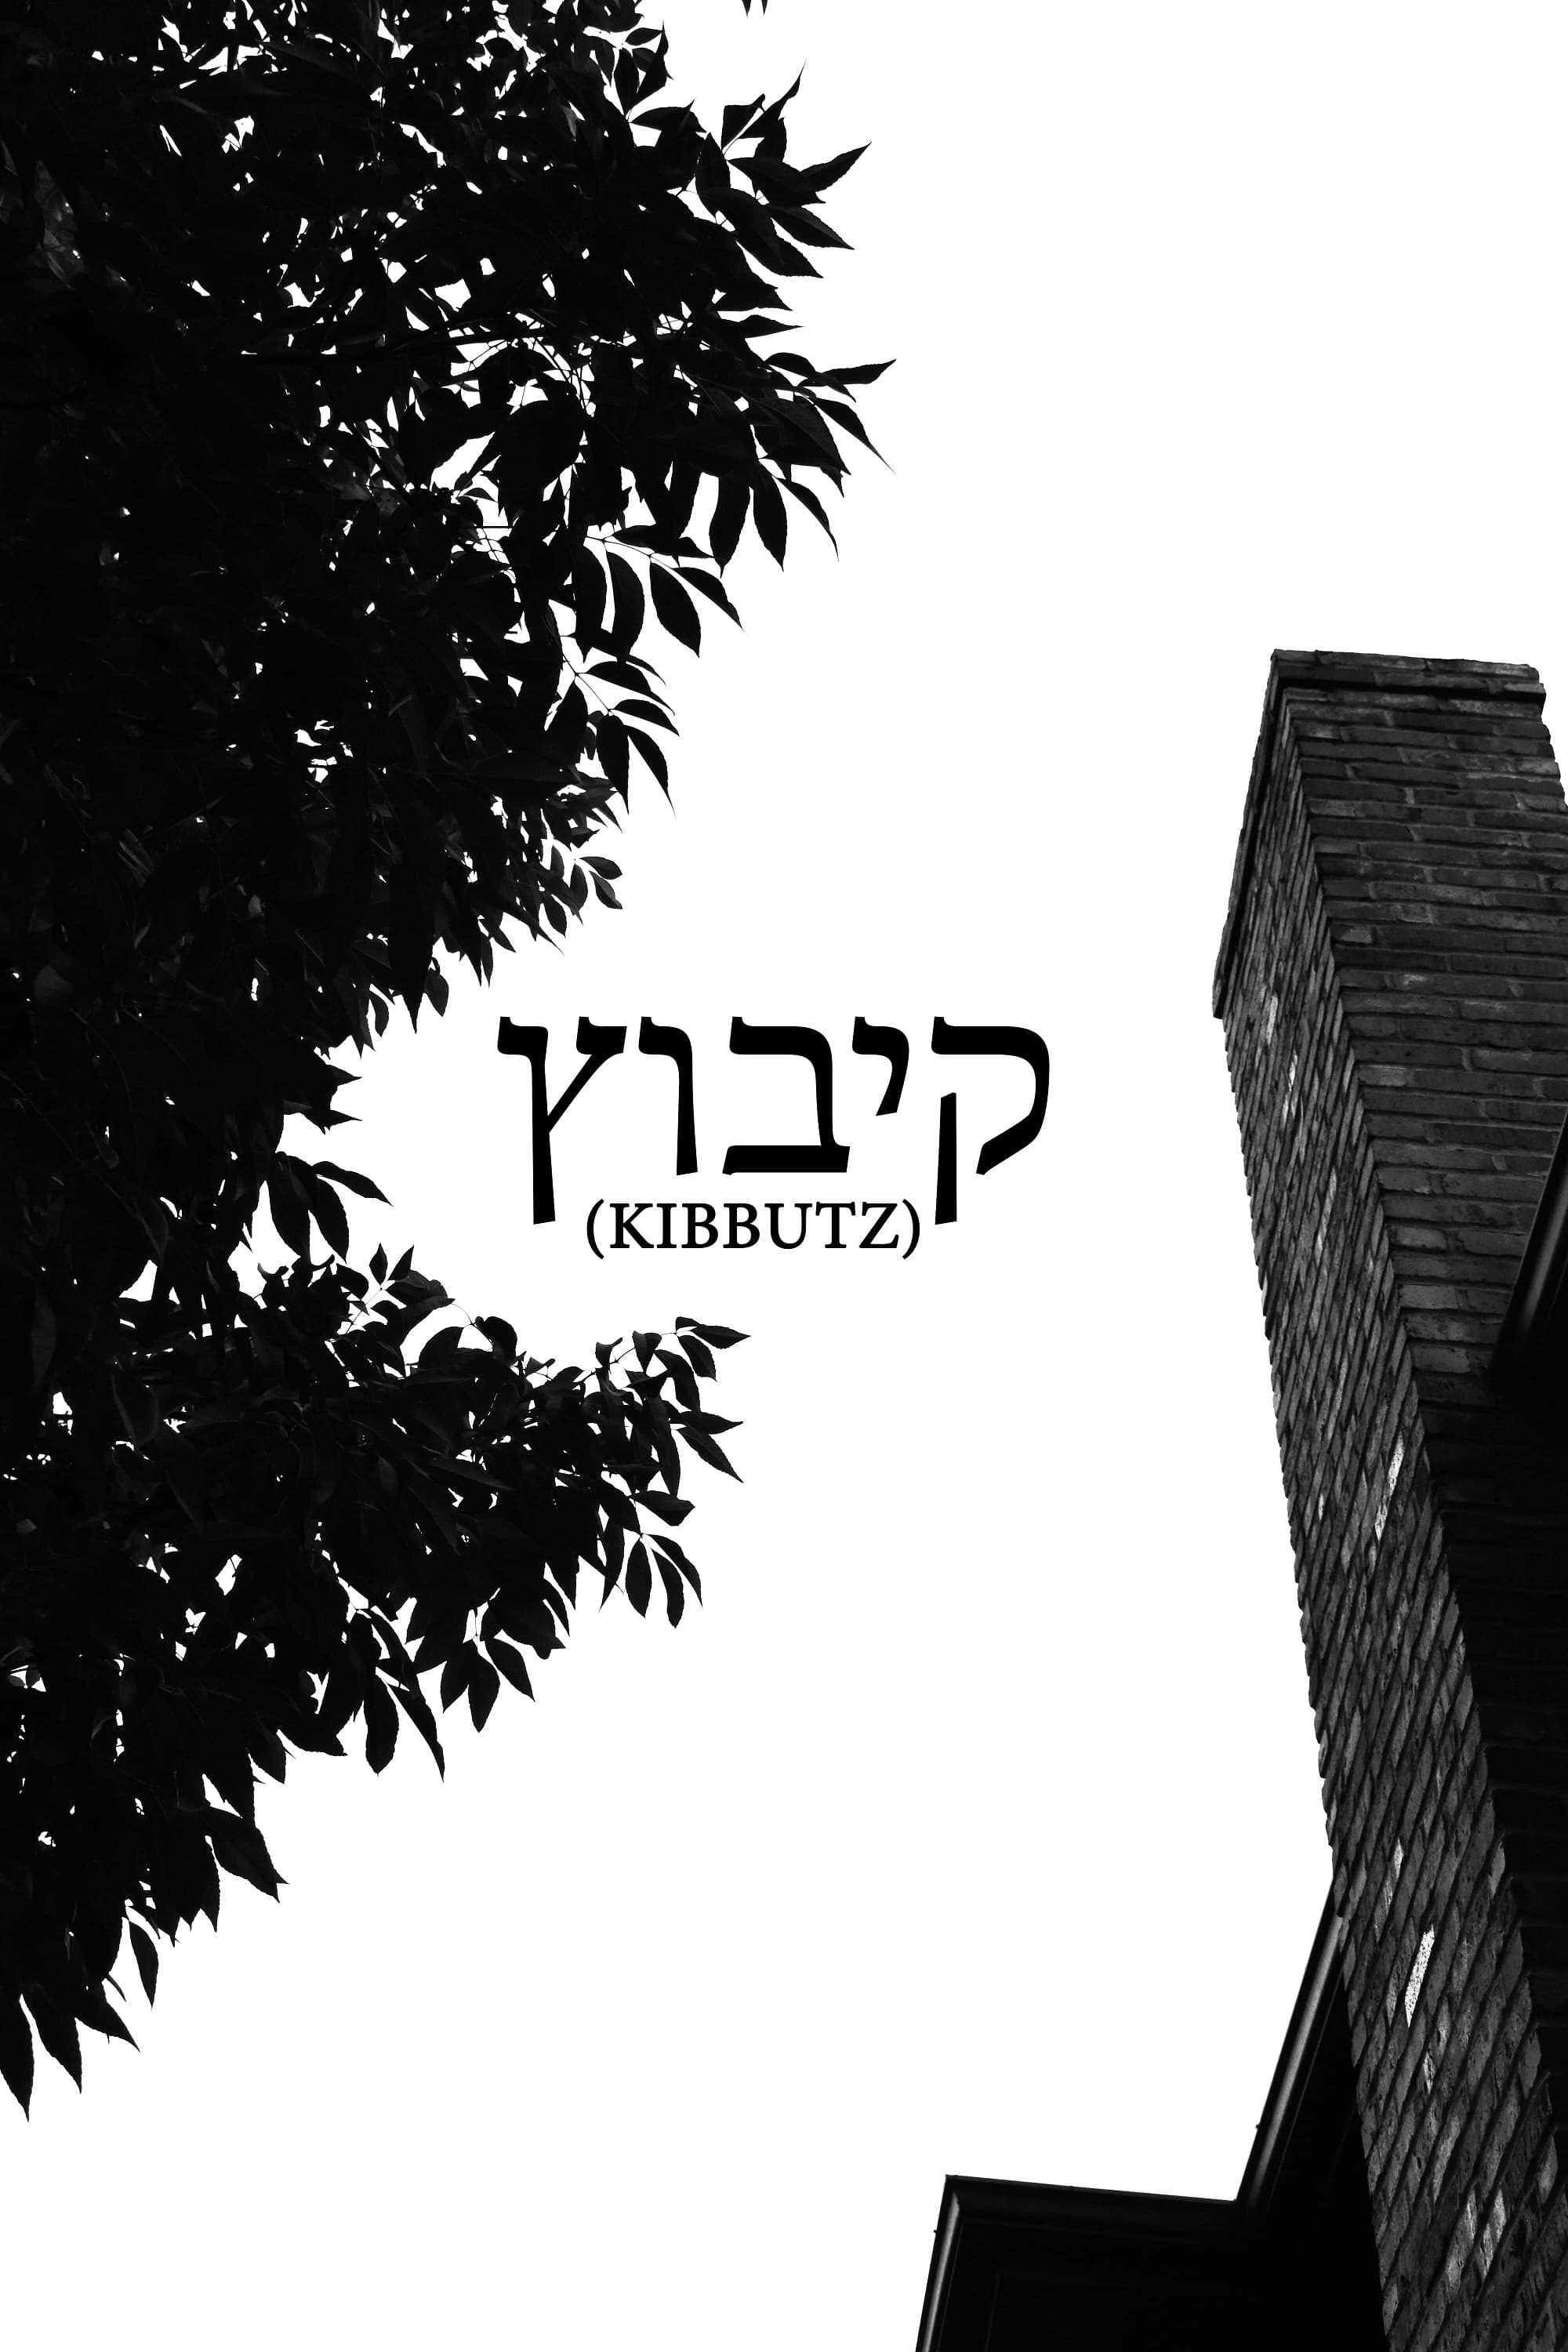 Kibbutz film